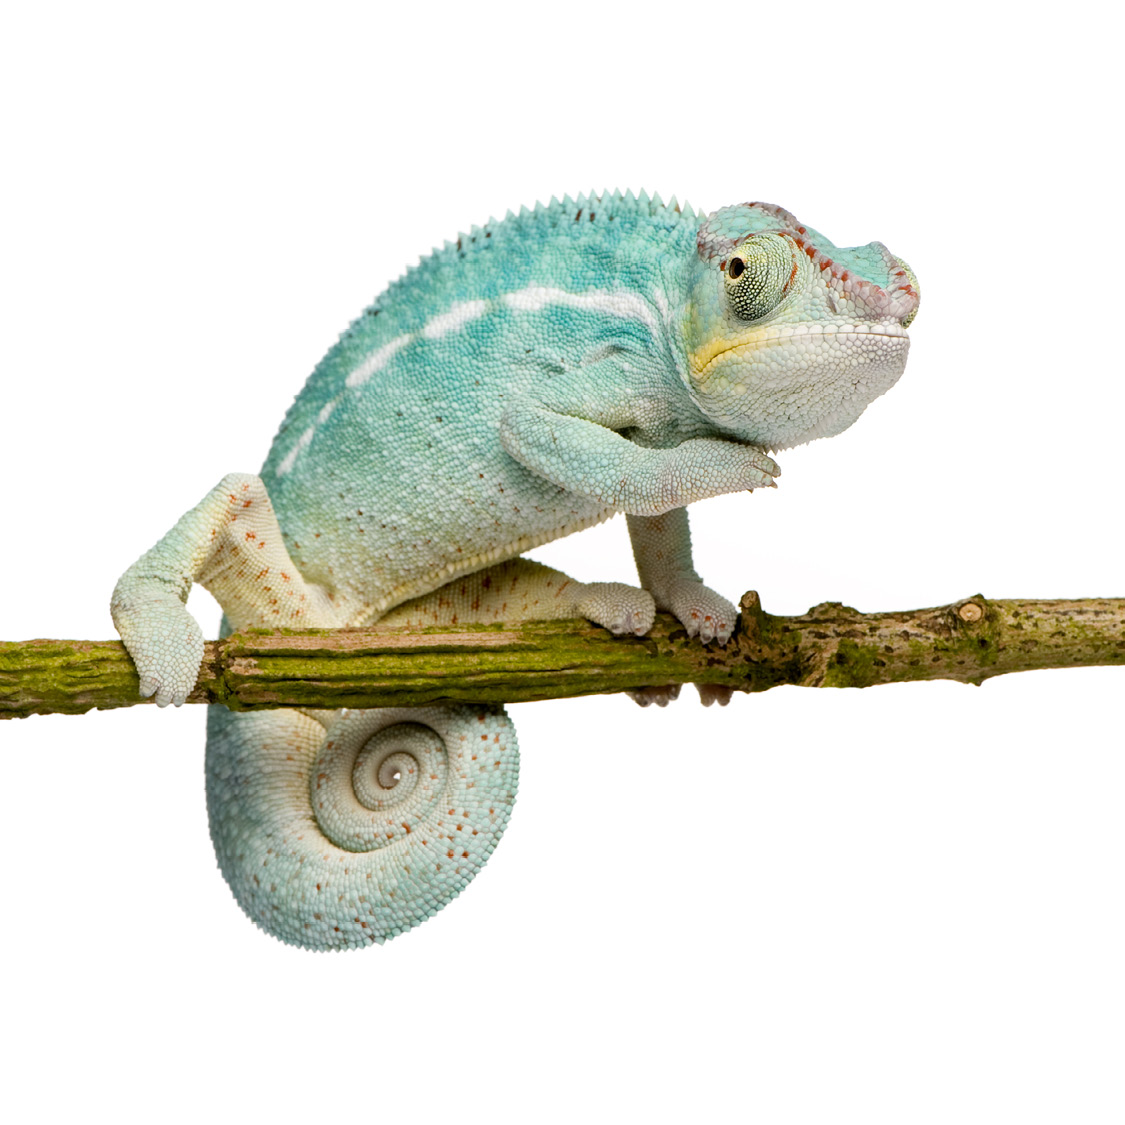 Young Chameleon SNAKES Albino Boa Constrictor - photo 25